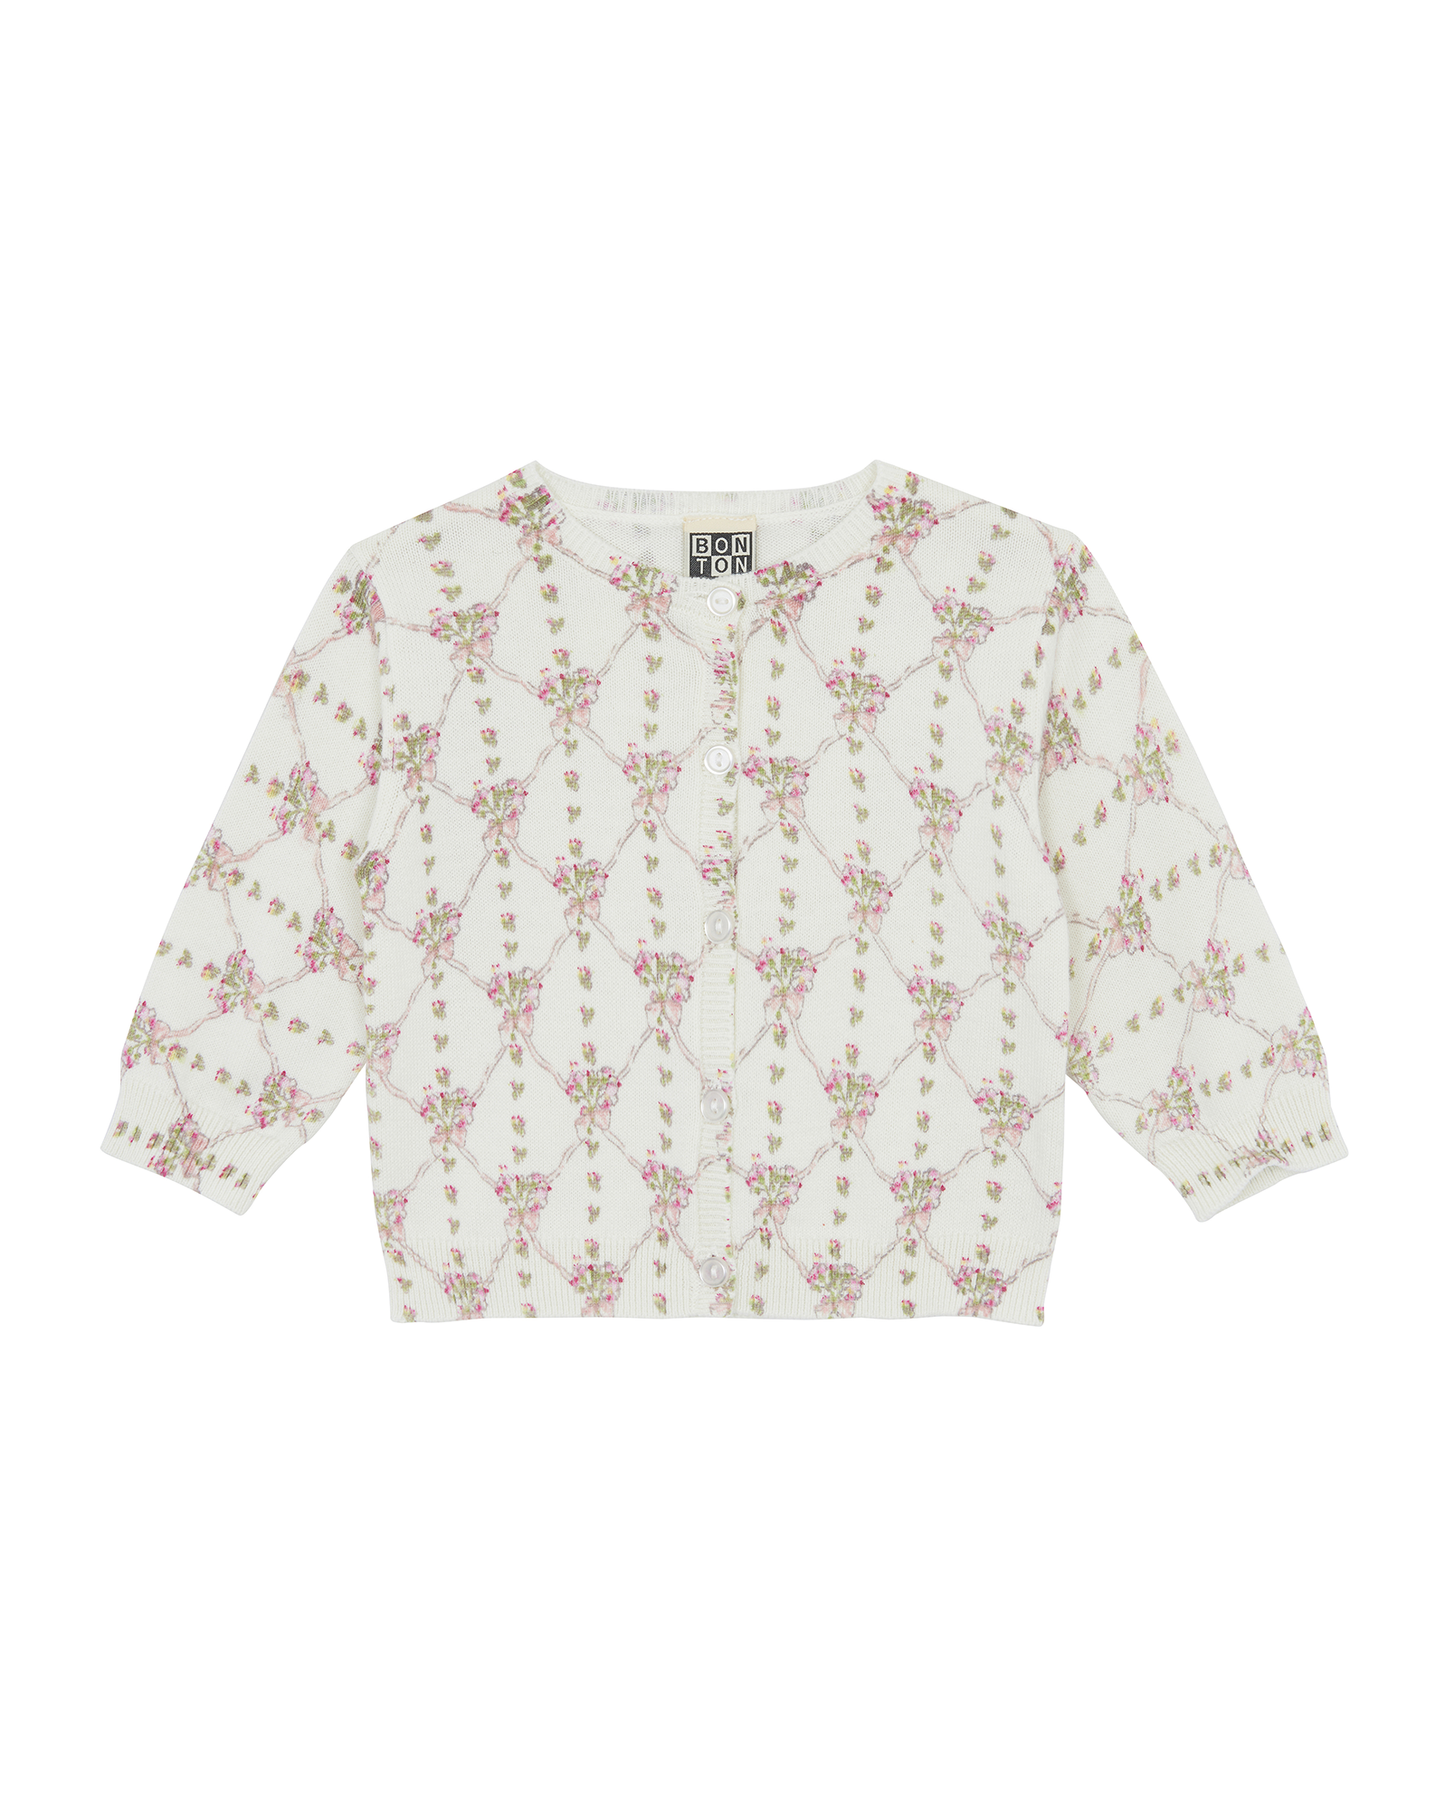 Cardigan - LILET Pink Baby Cotton mesh Printe